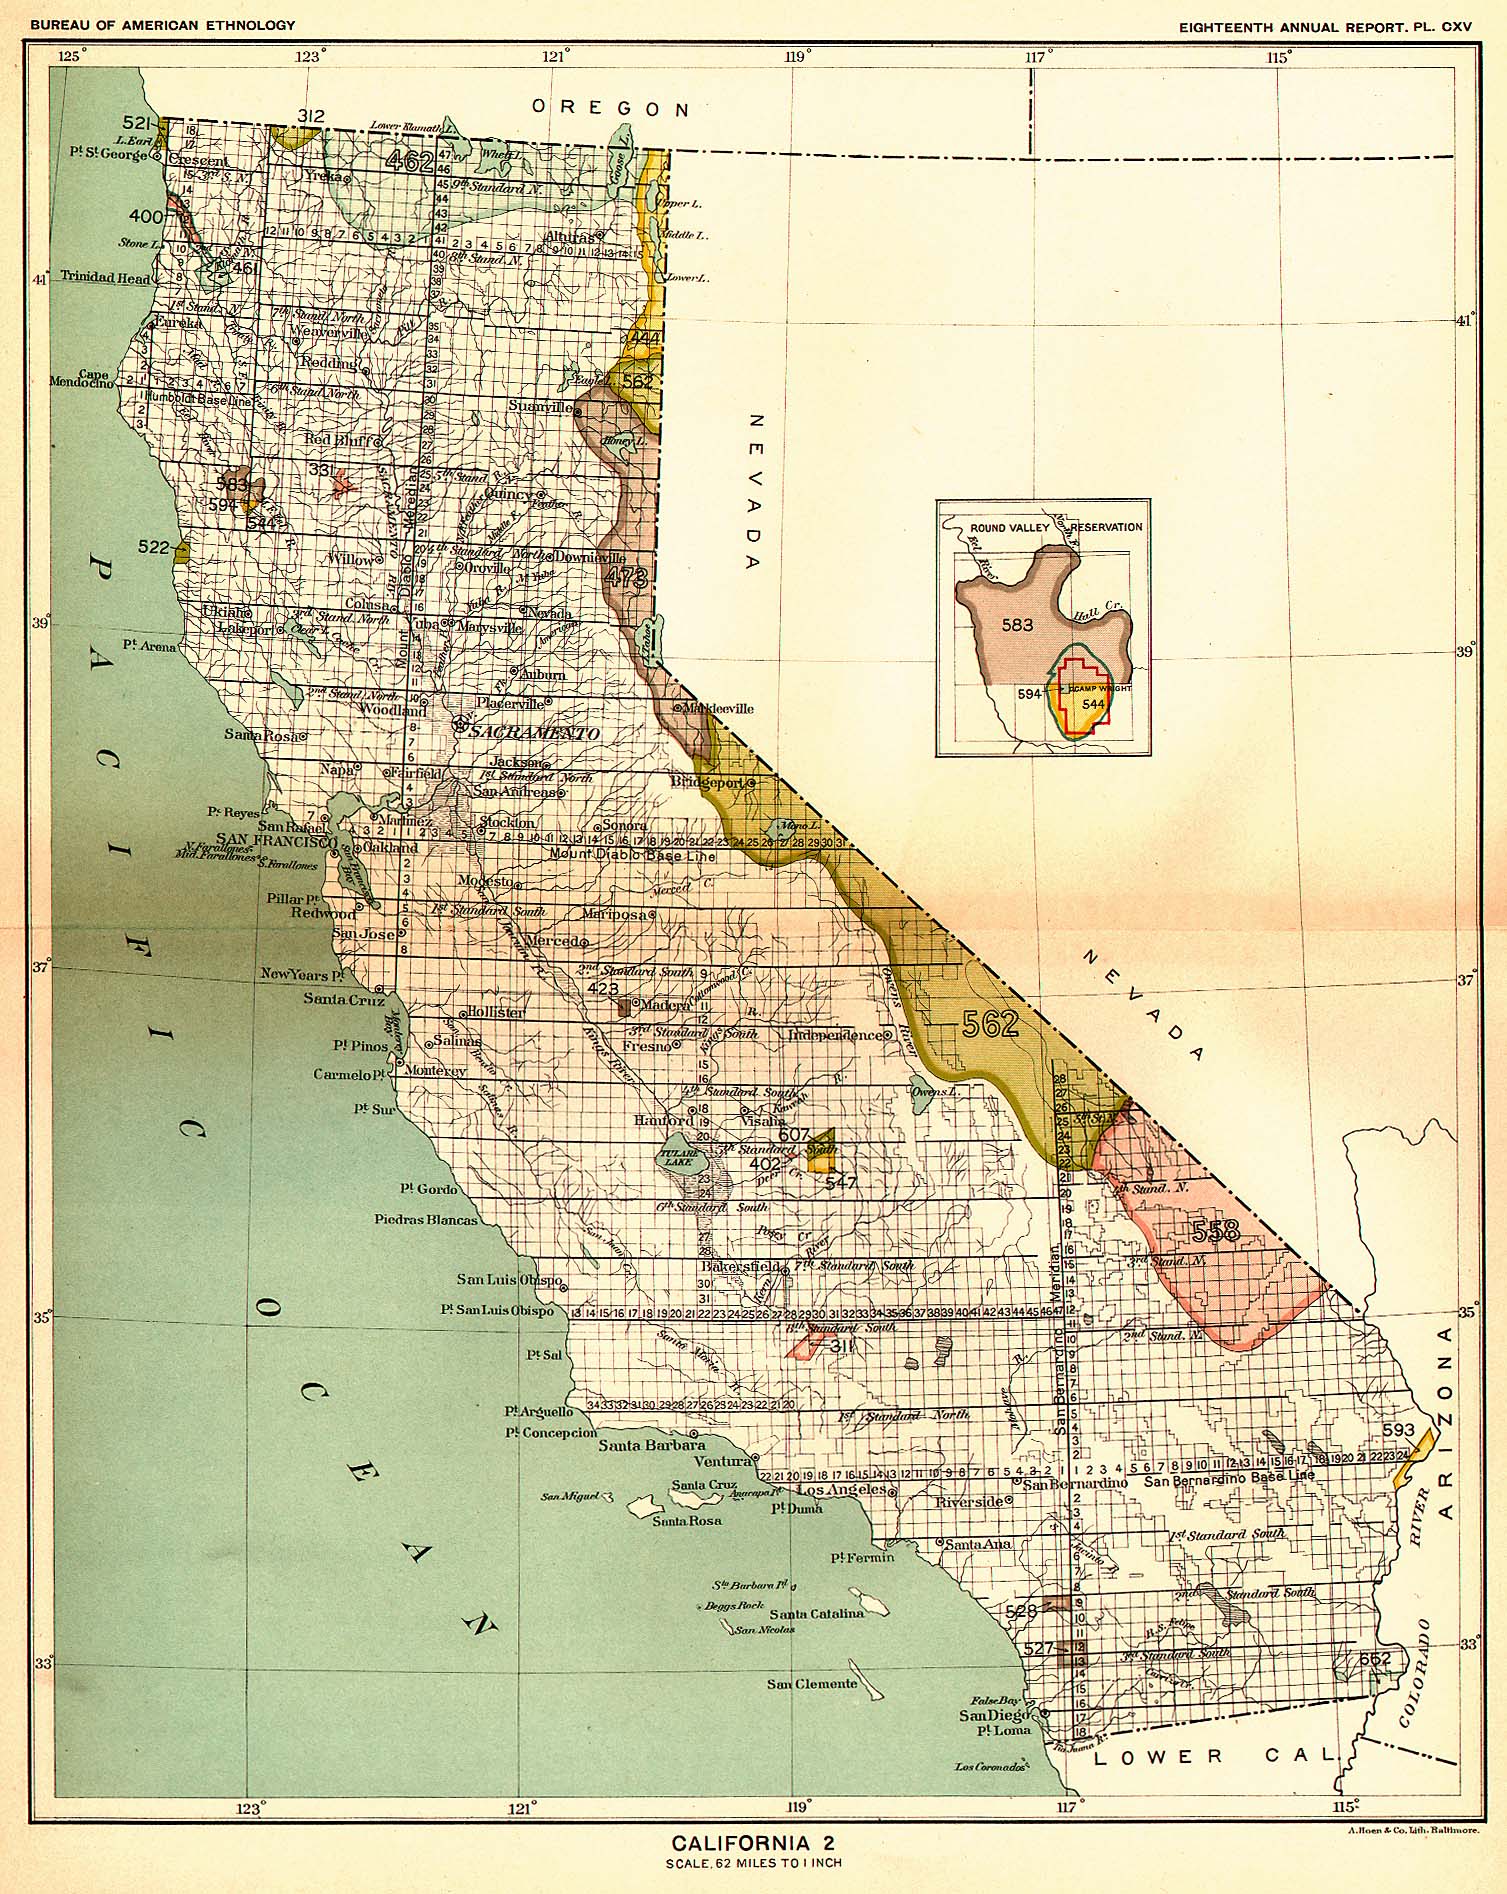 California 2, Map 8